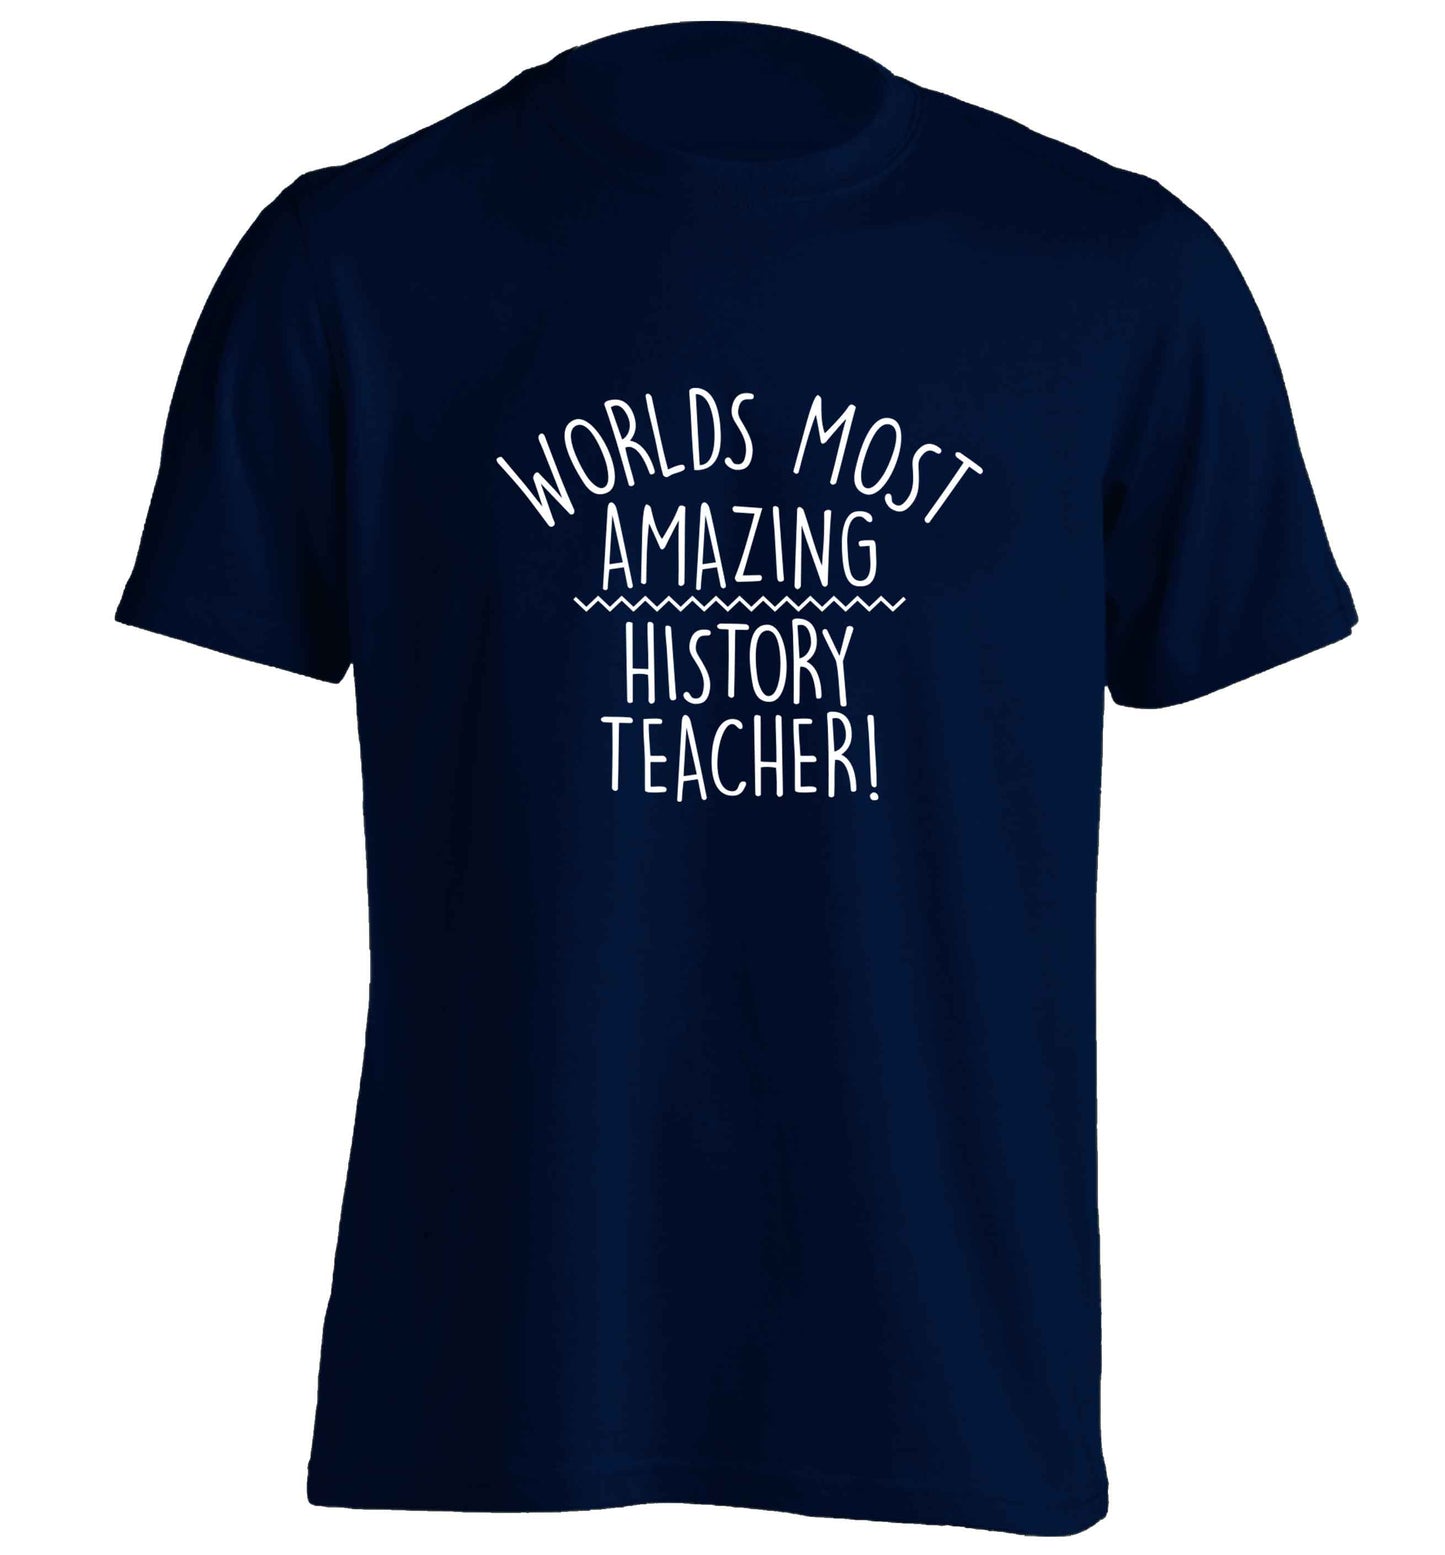 Worlds most amazing History teacher adults unisex navy Tshirt 2XL